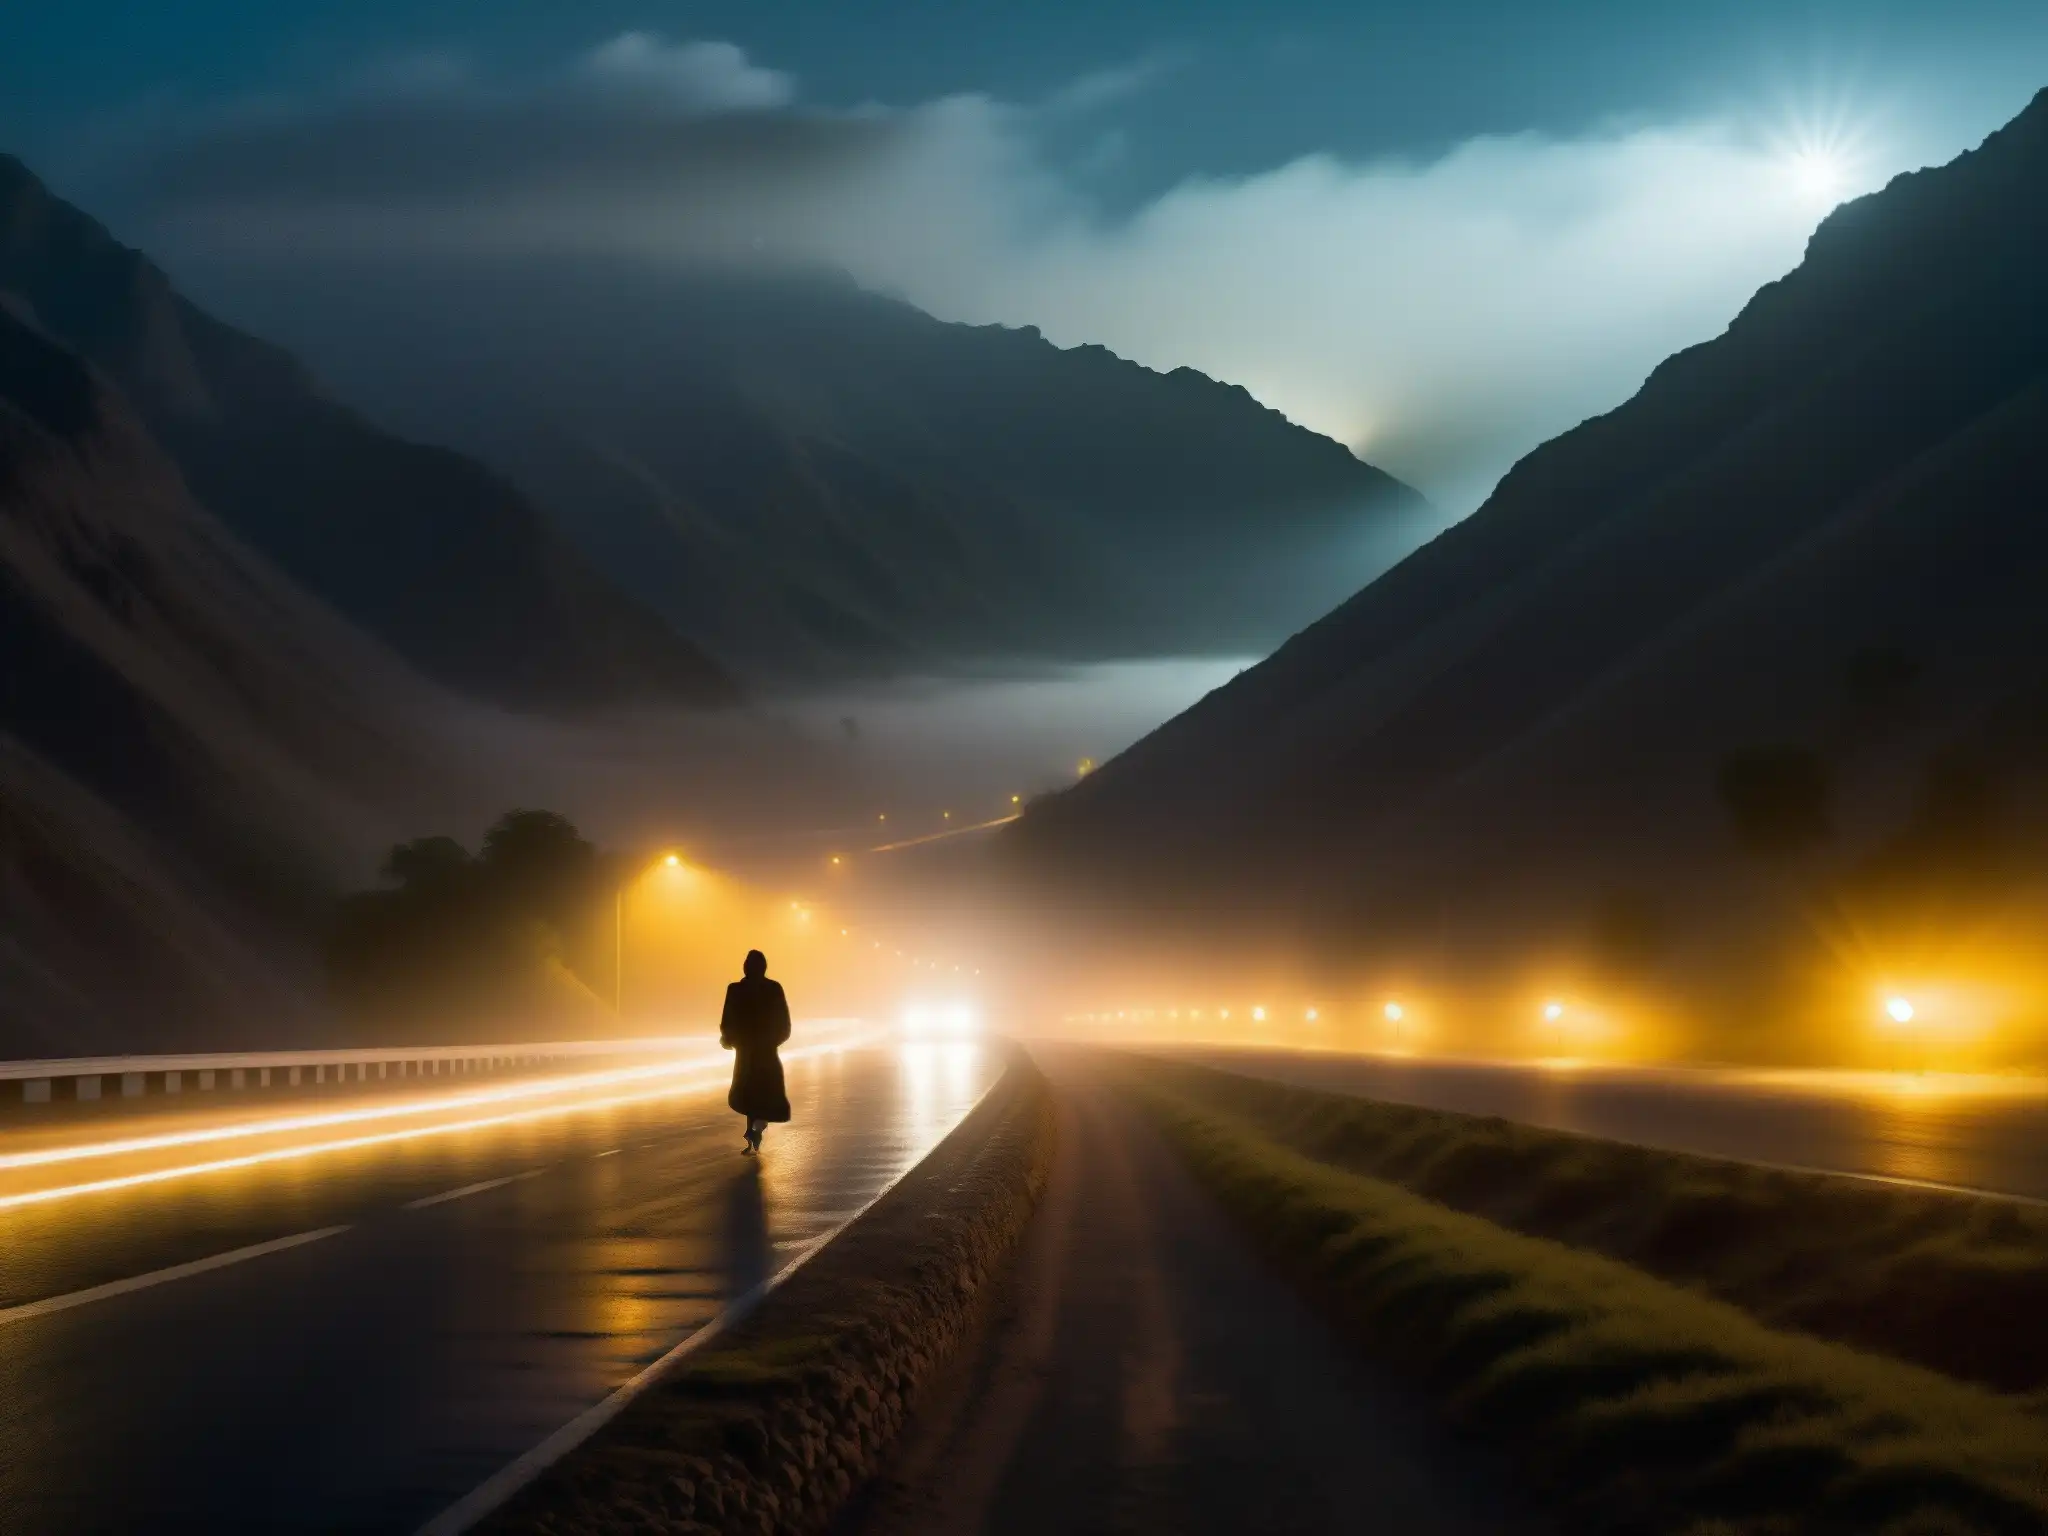 Una figura fantasmal se eleva sobre la carretera en Pakistán, rodeada de misteriosa niebla